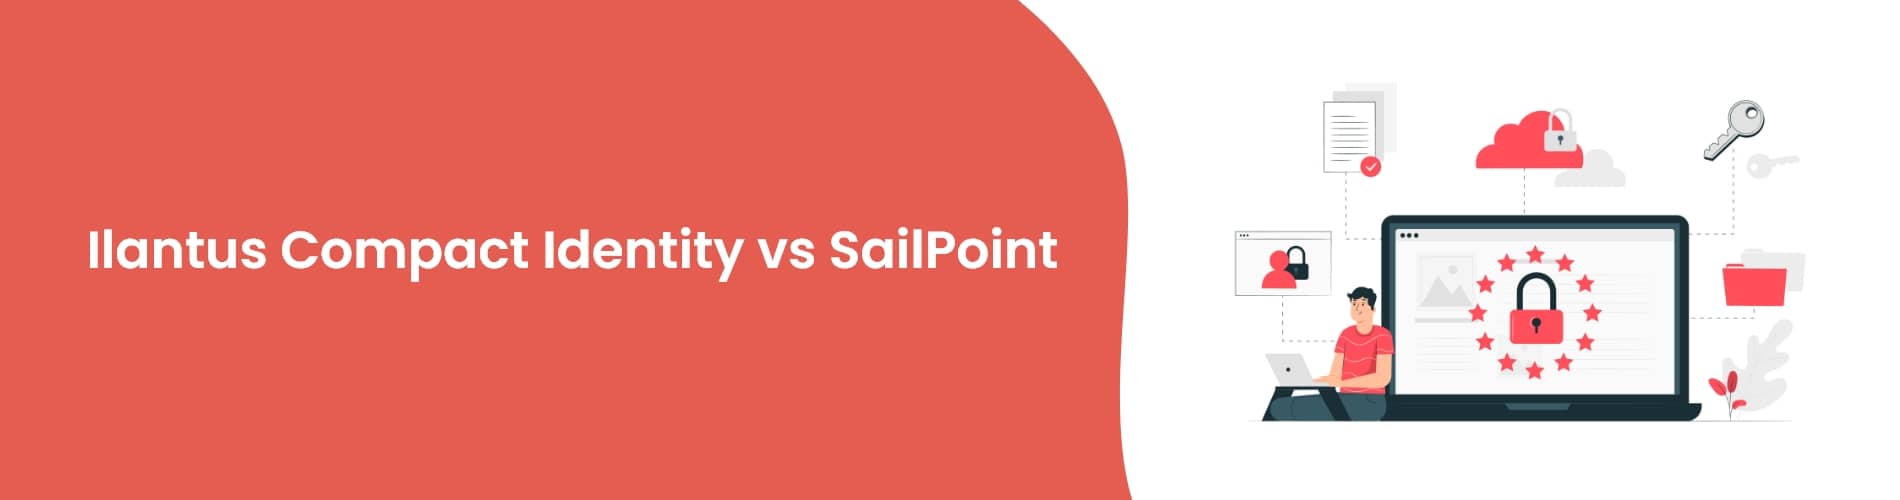 SailPoint or Ilantus Compact Identity